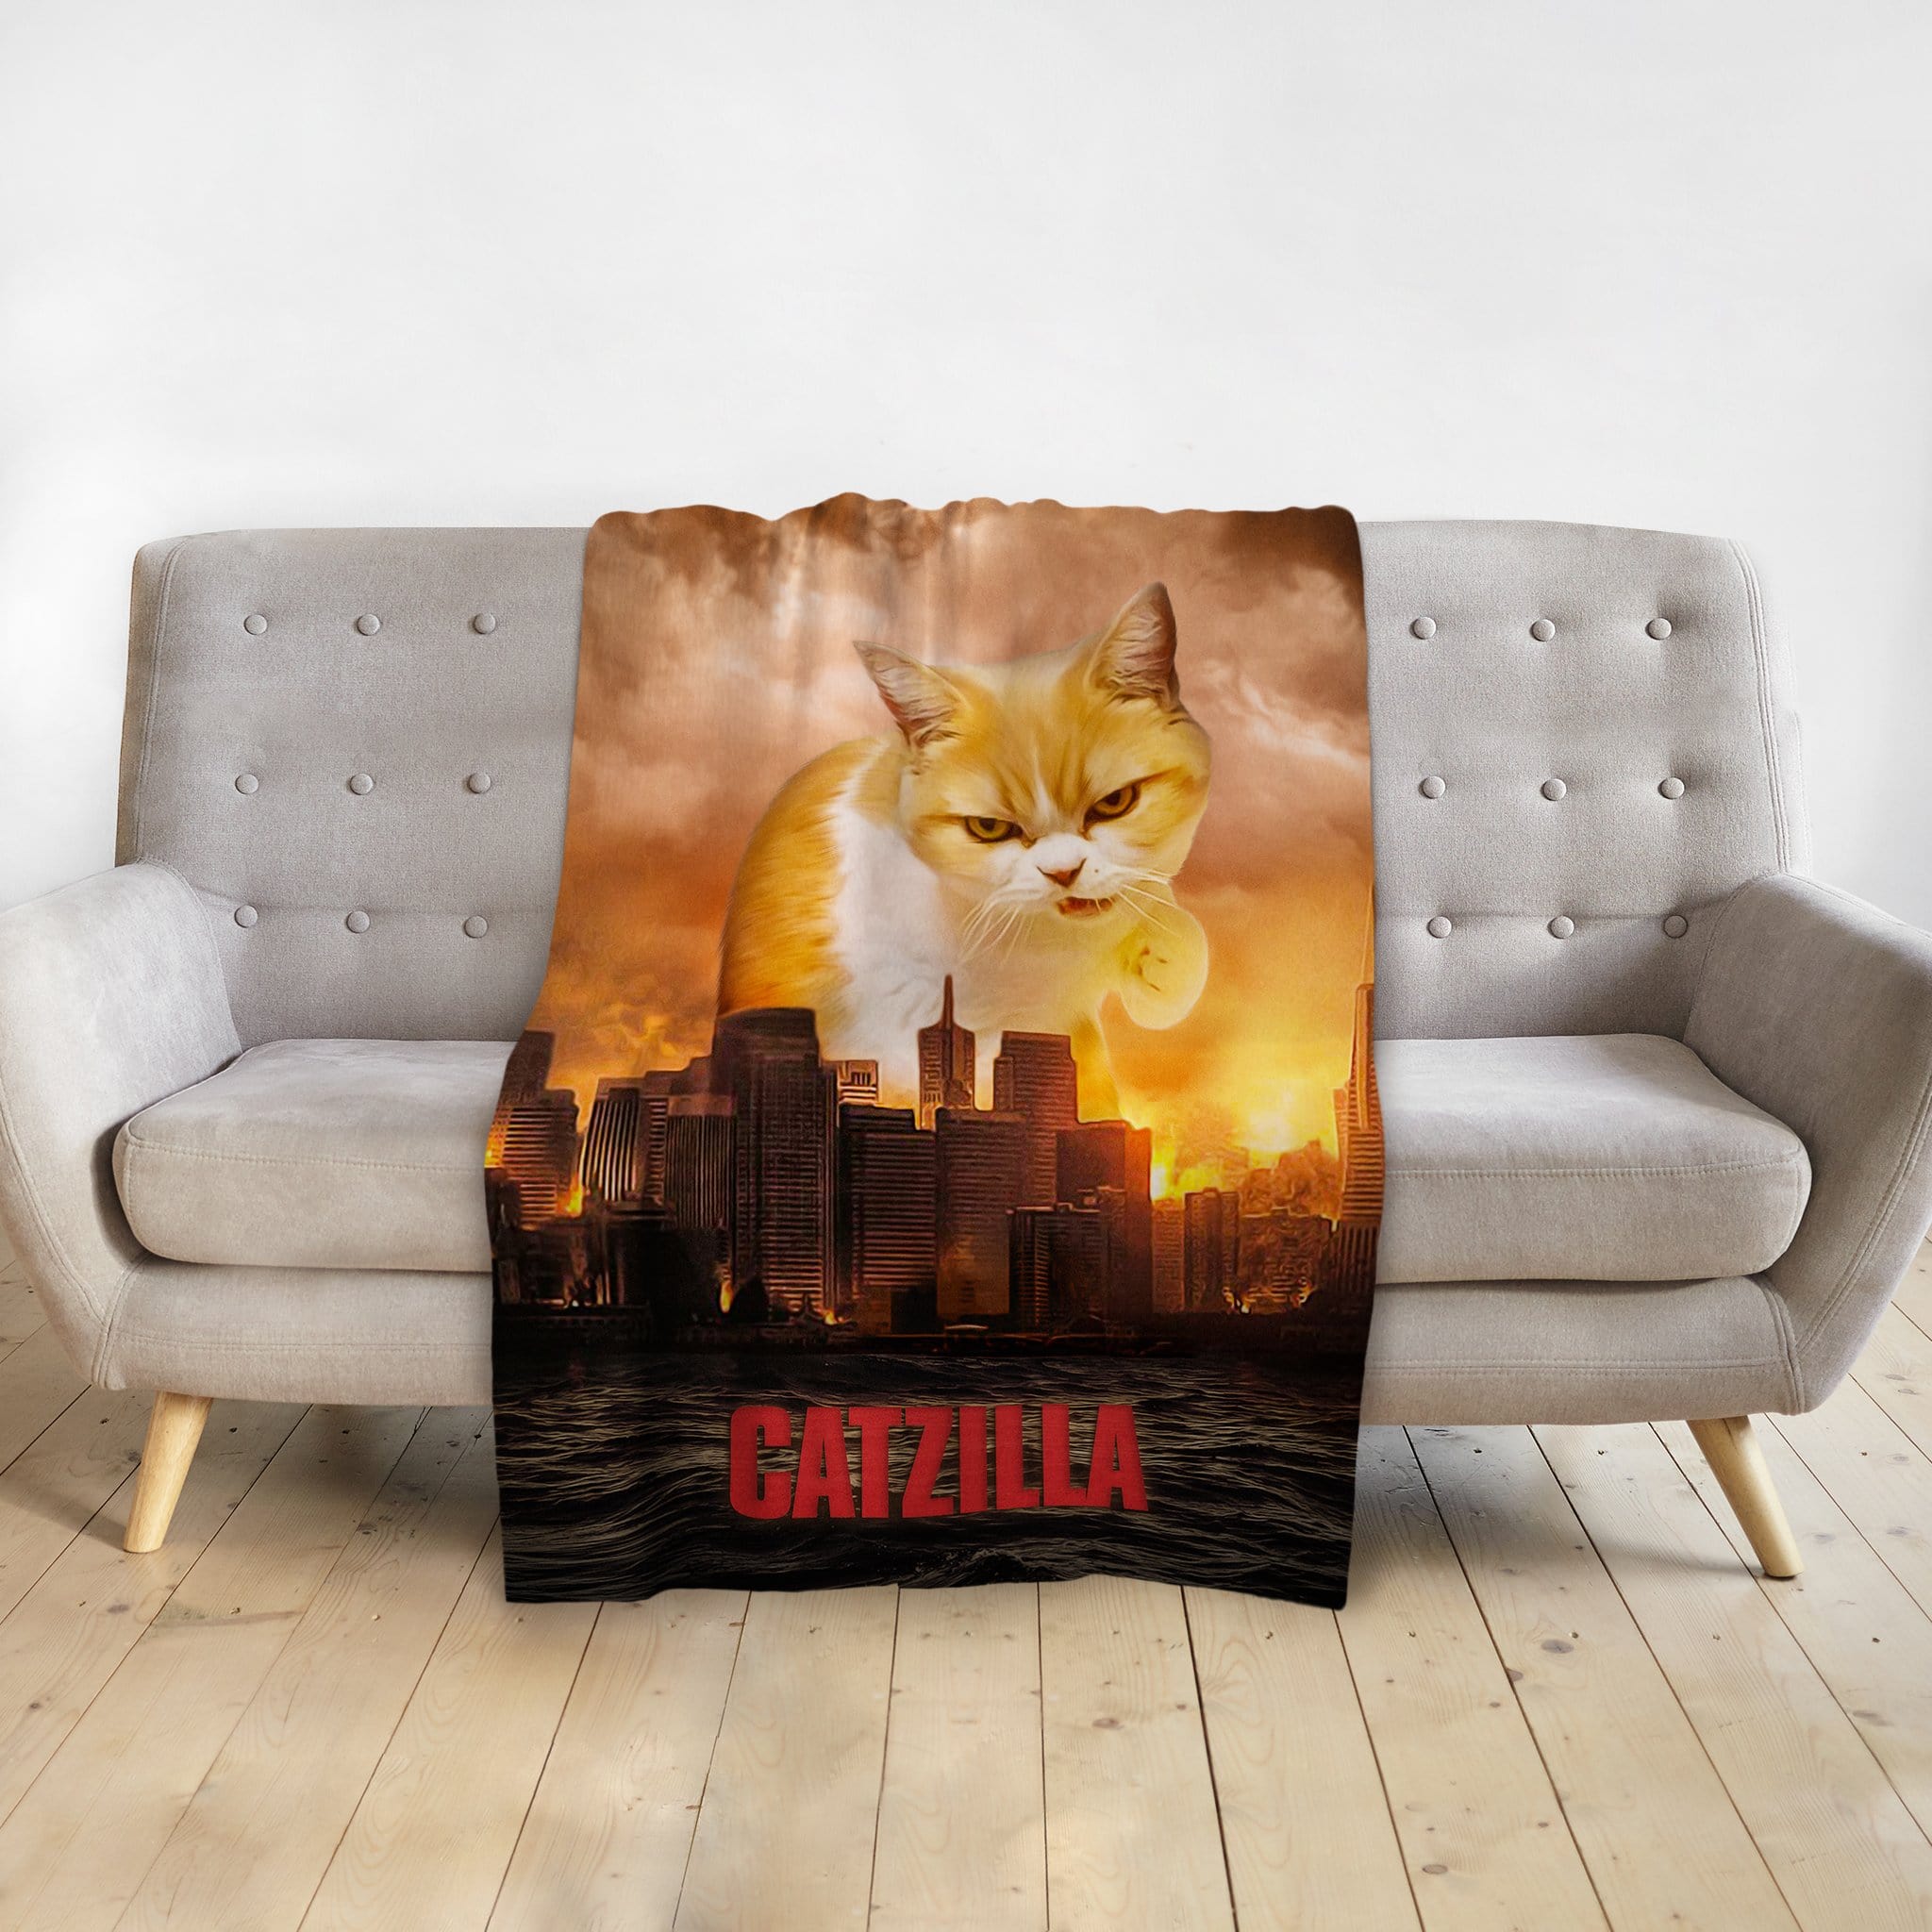 &#39;Catzilla&#39; Personalized Pet Blanket